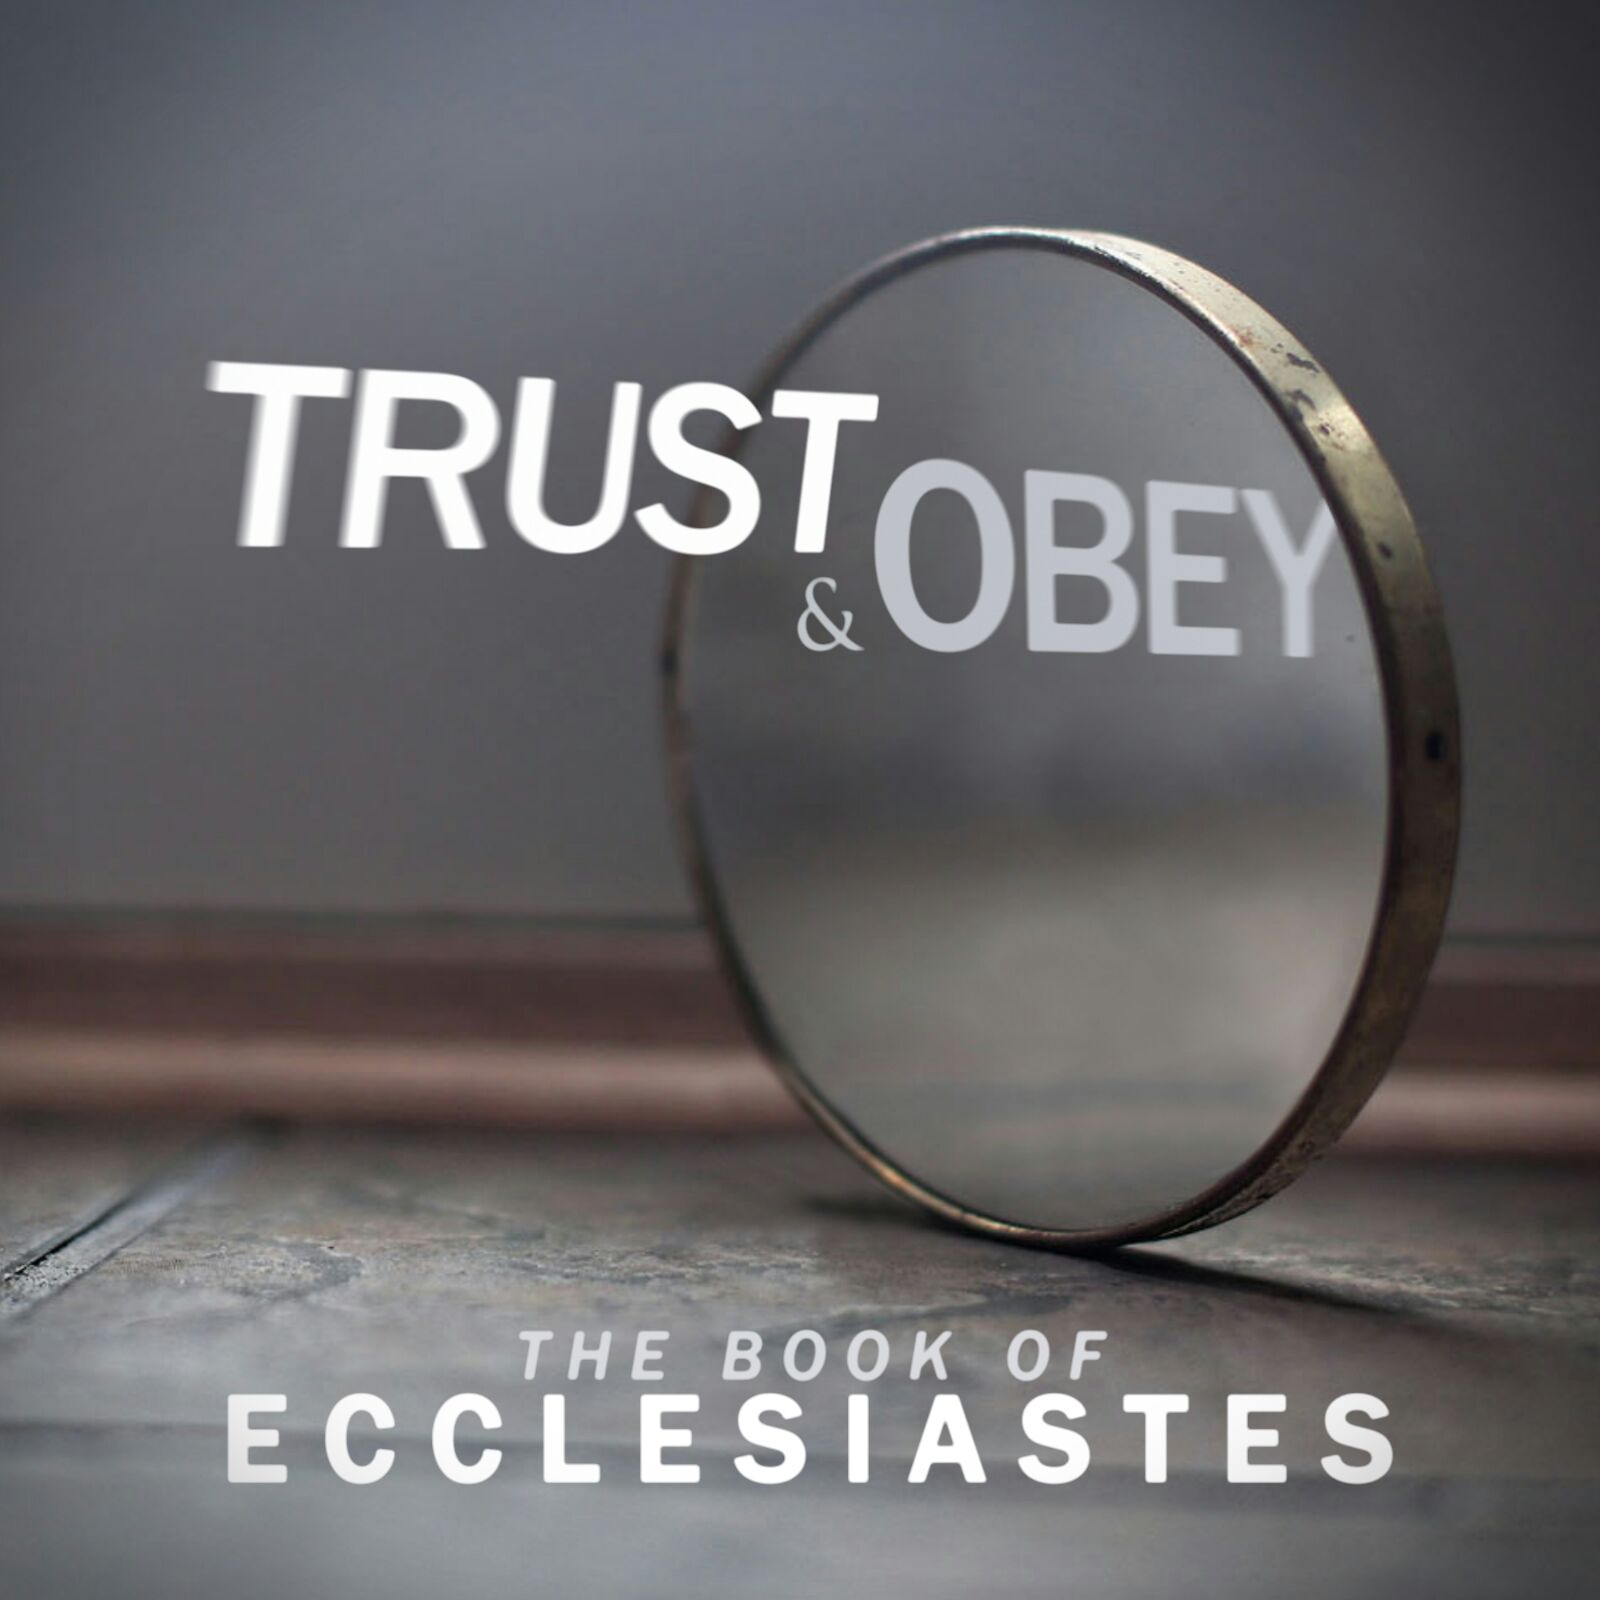 Ecclesiastes 2: 1-11 - The Emptiness of Pleasure